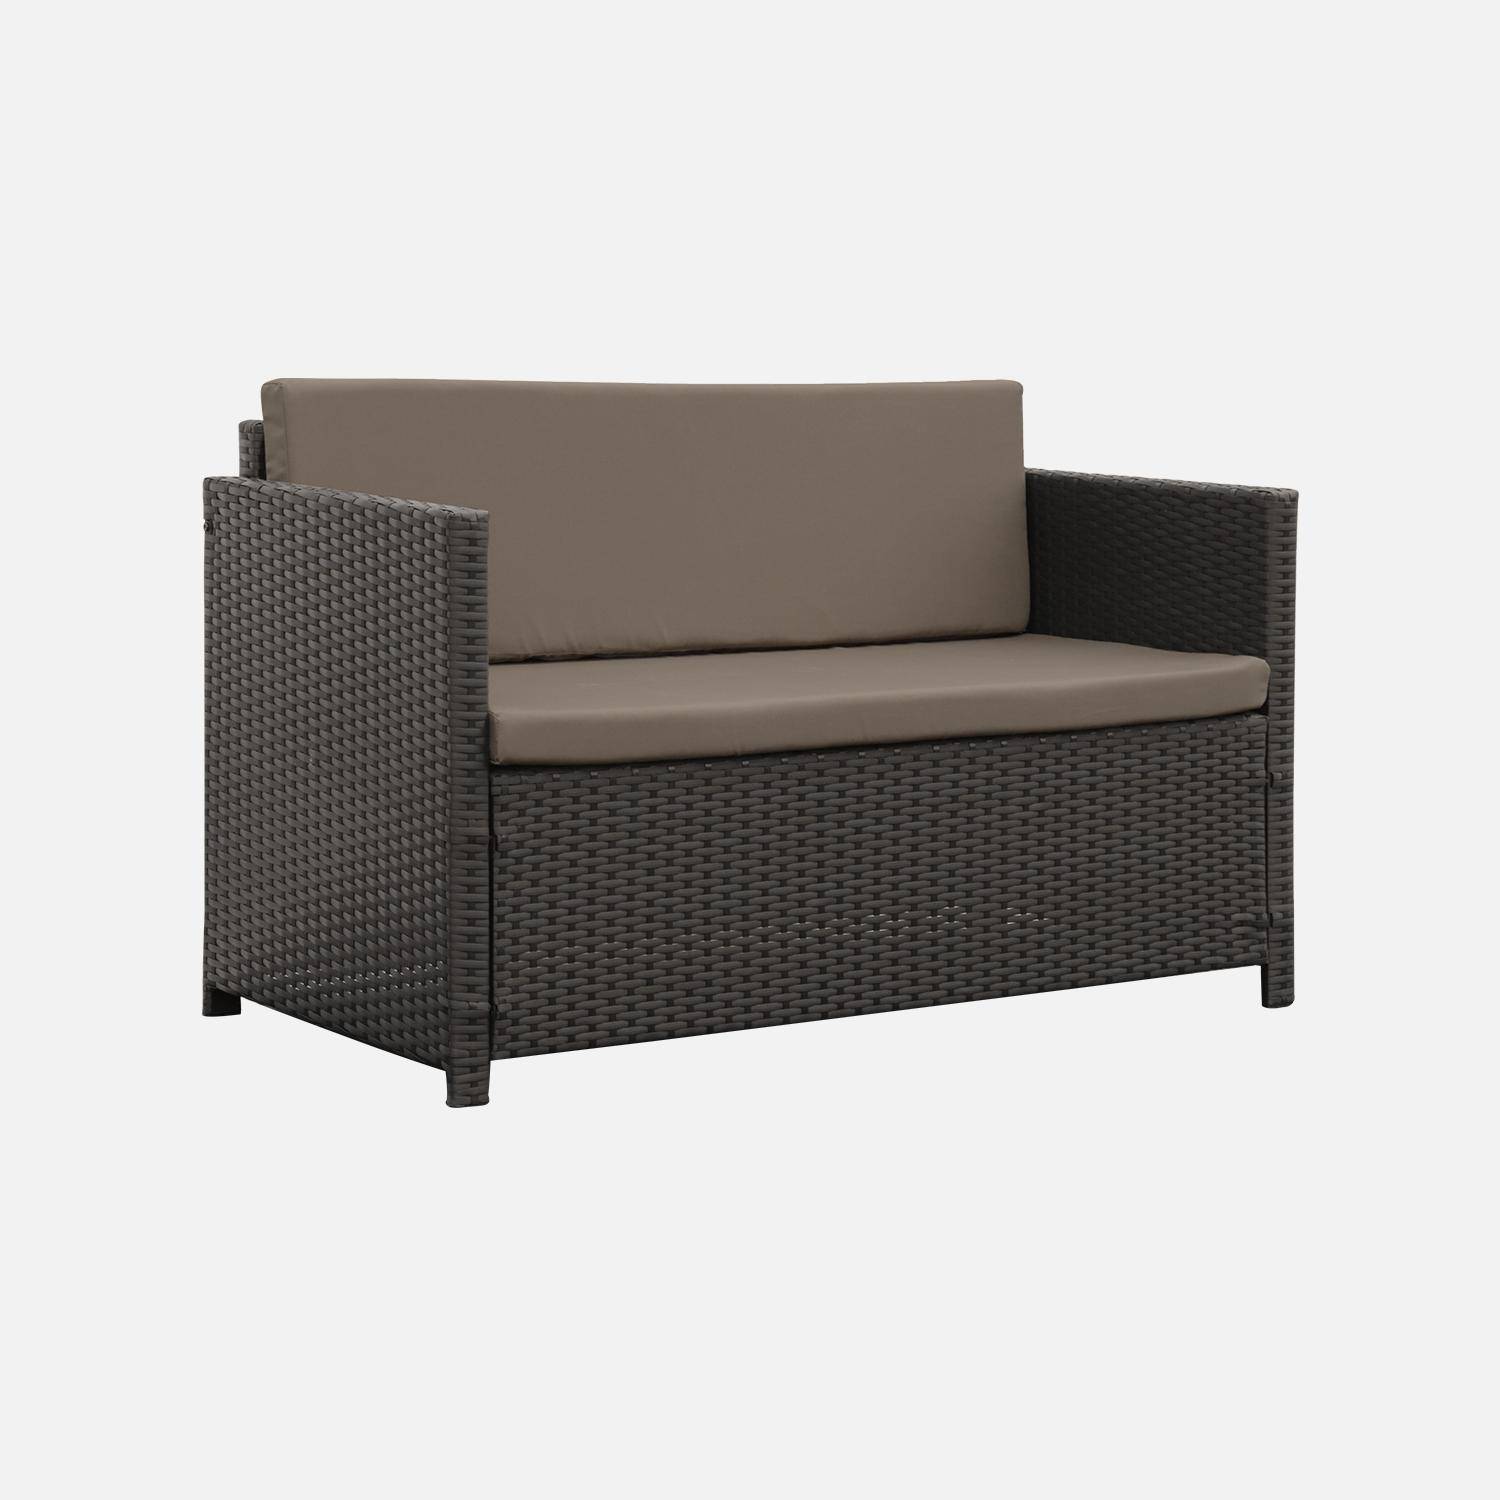 4-seater polyrattan garden sofa set - sofa, 2 armchairs, coffee table - Perugia - Brown rattan, Chocolate cushions Photo3